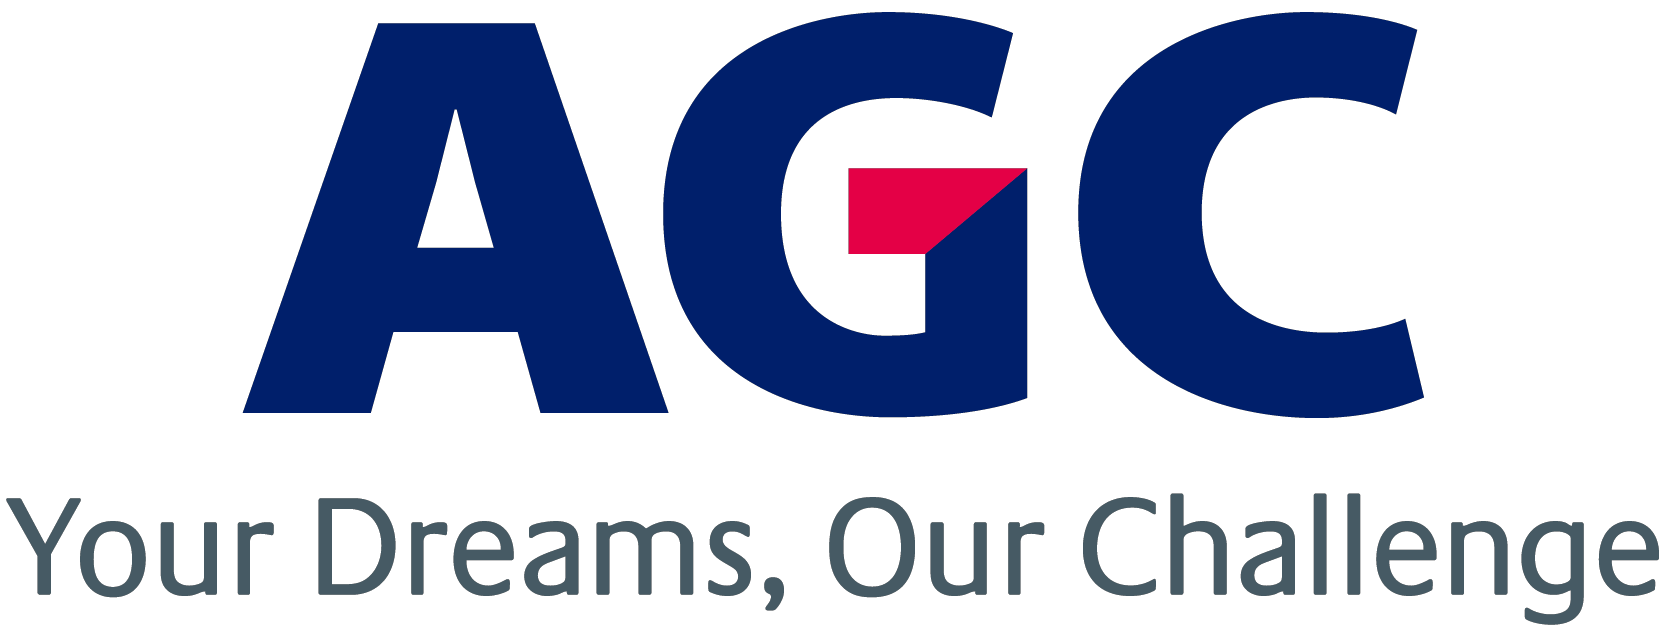 agc group brand logo and brand statement logo center